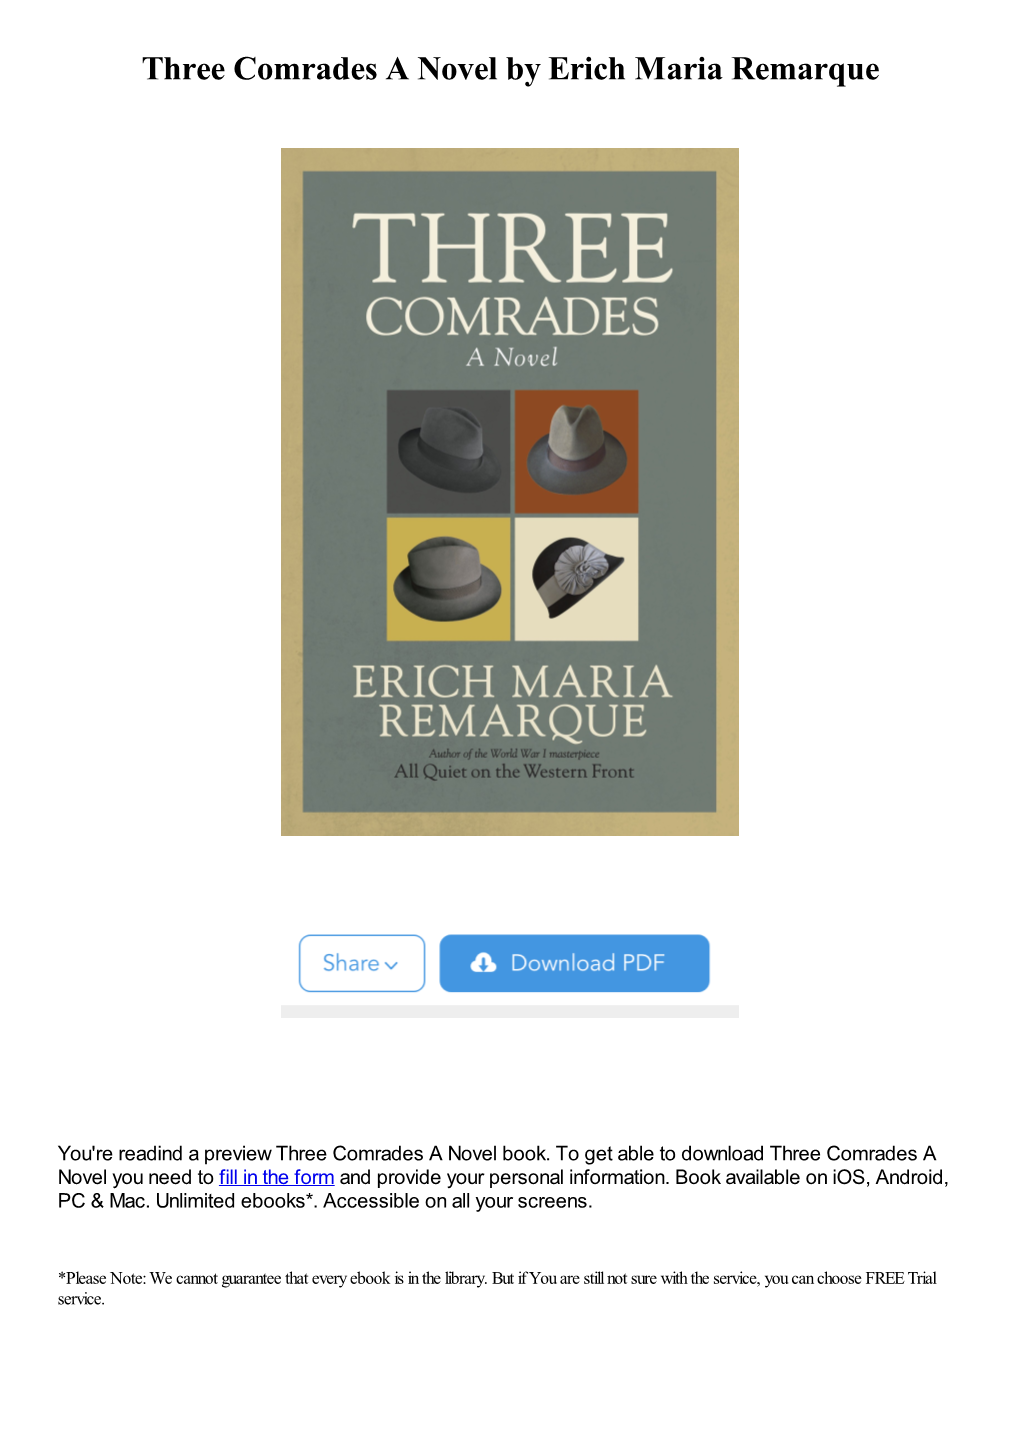 Three Comrades a Novel by Erich Maria Remarque